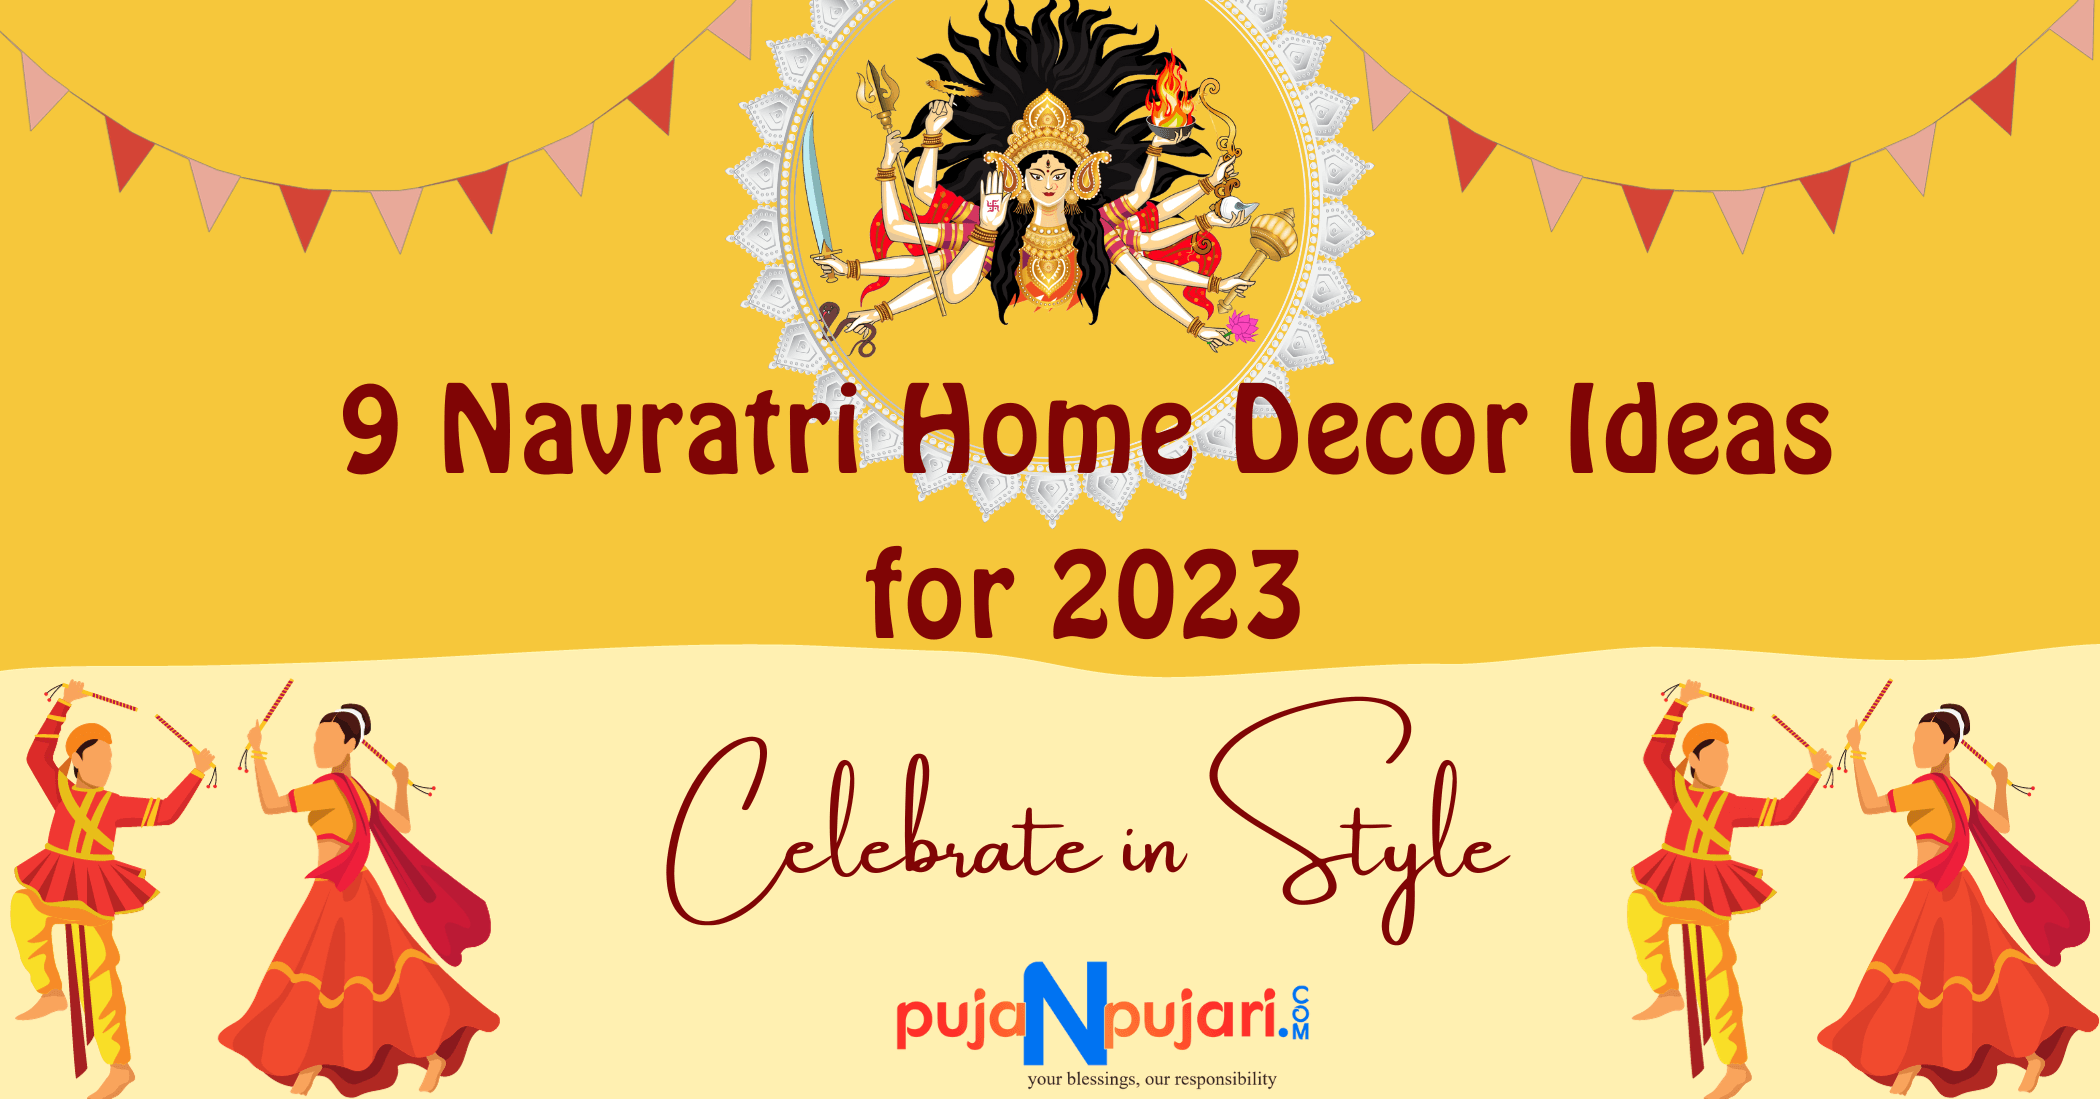 9 Navratri Home Decor Ideas for 2023: Celebrate in Style